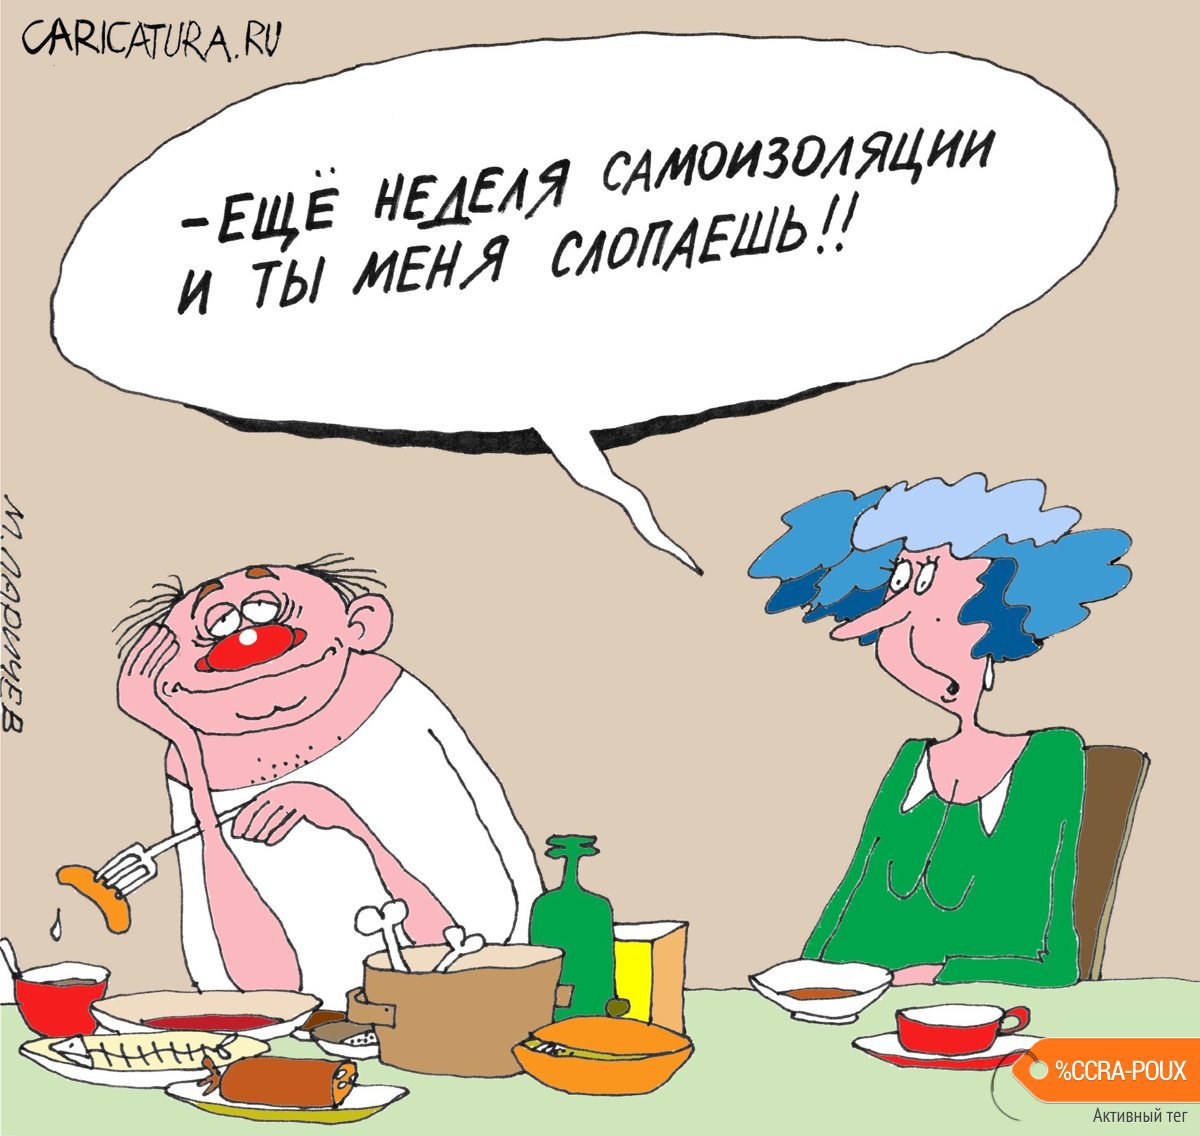 Карикатура "Скучно...", Михаил Ларичев